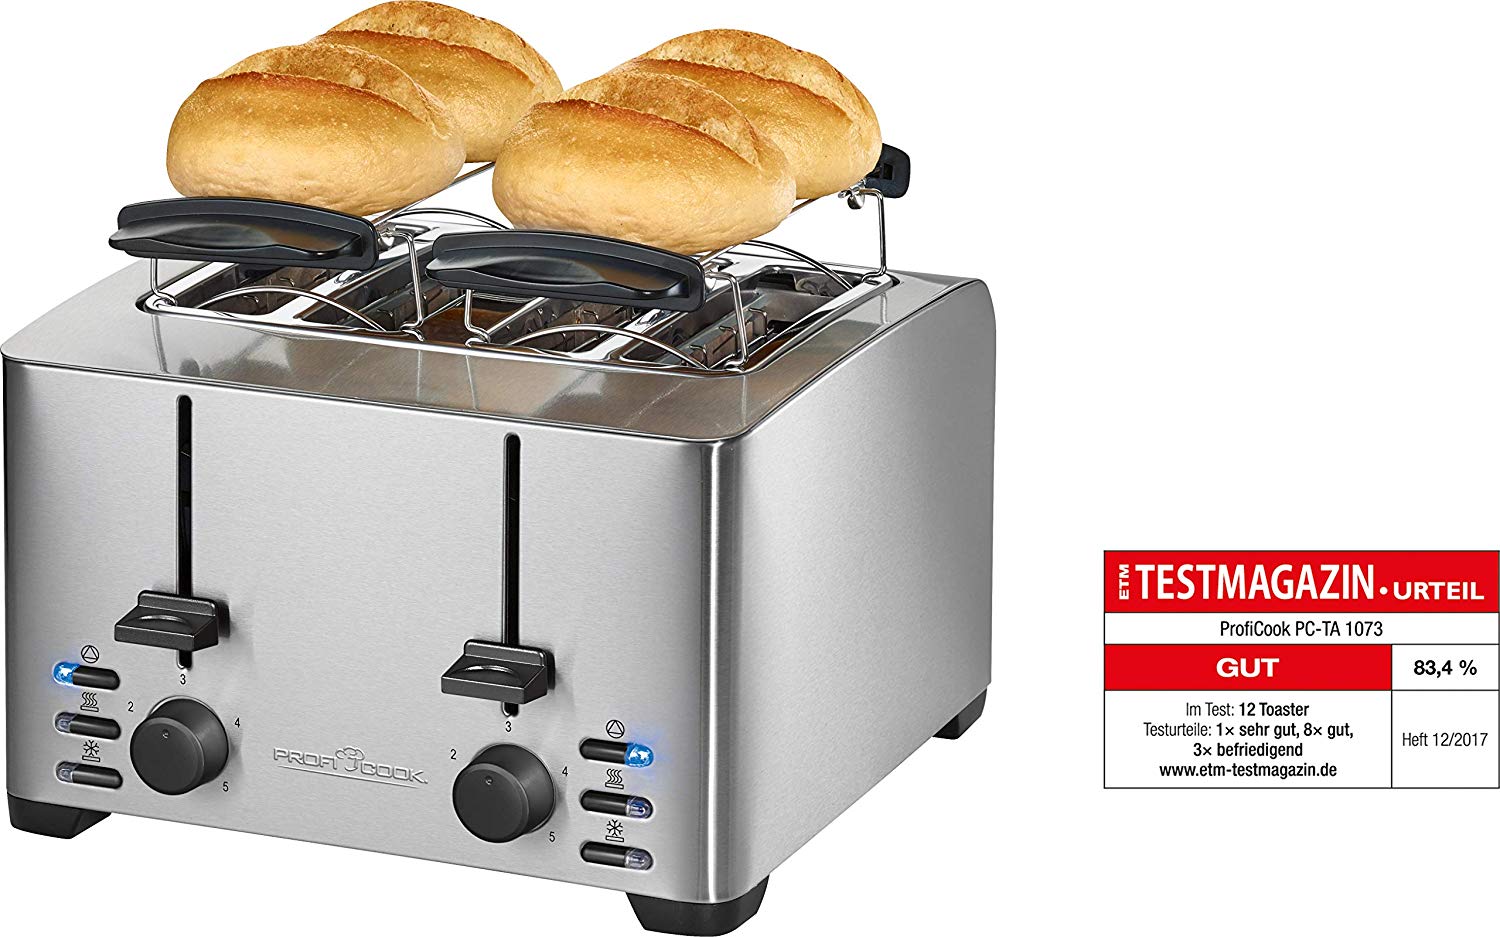 http://honestforwarder.com/uploads/product/O94fkHXVfm-4-slice-toaster-stainless-steel-housing-extra-wide-slots-profi-cook-pc-ta-107380.jpg